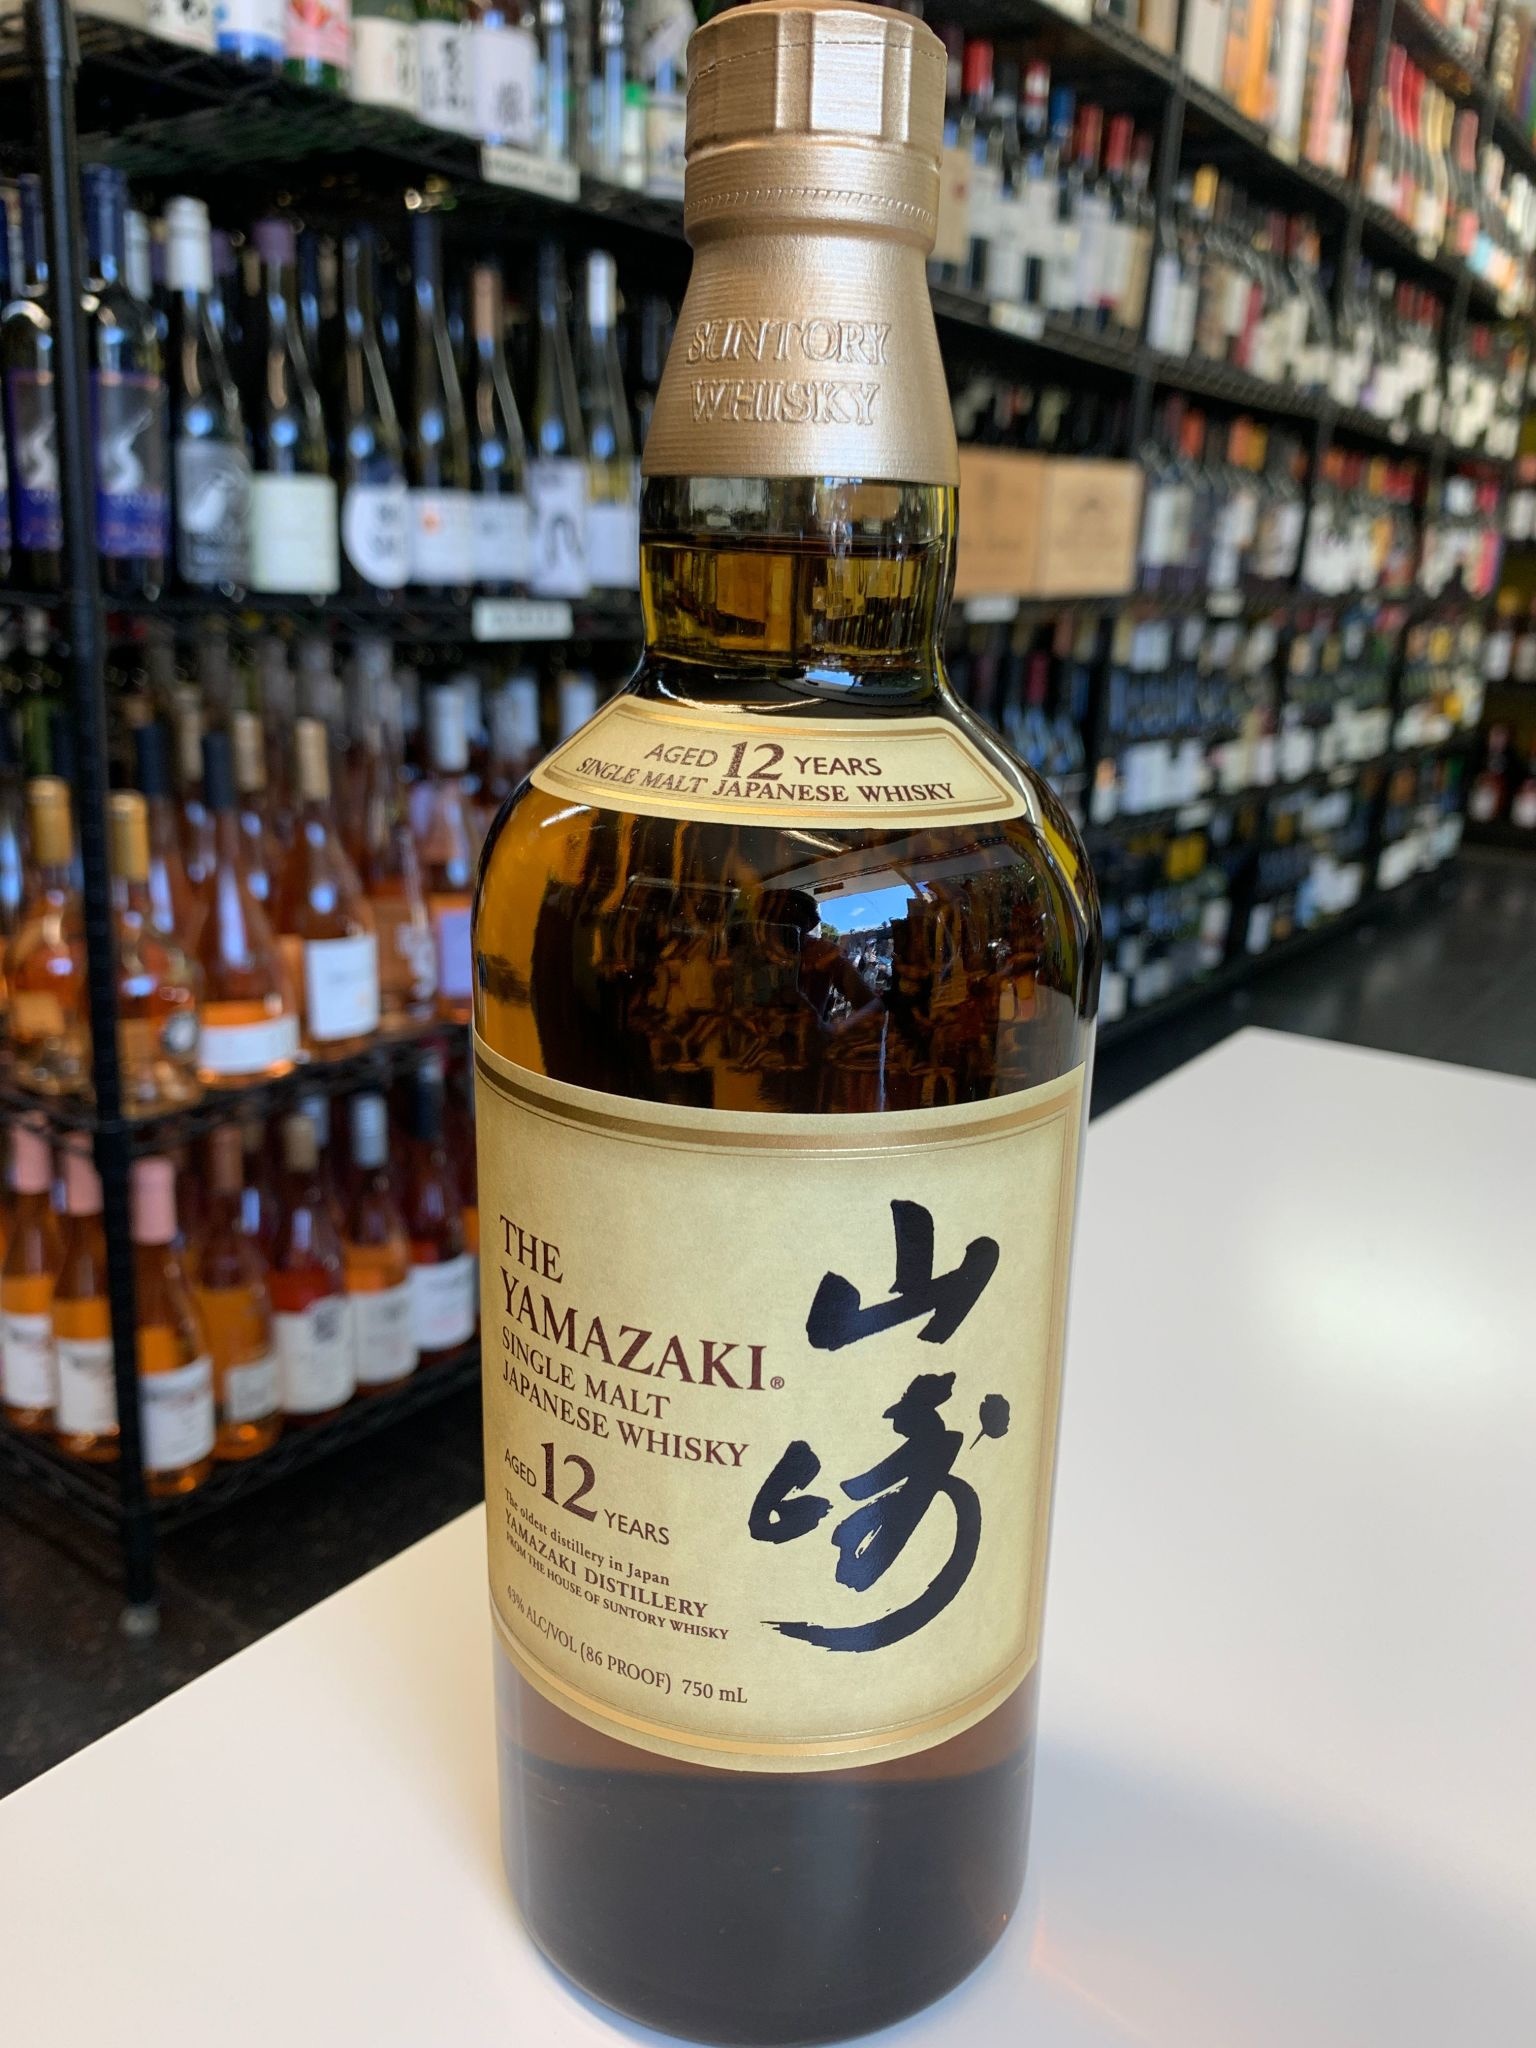 Suntory Yamazaki Single Malt Japanese Whisky 12 years